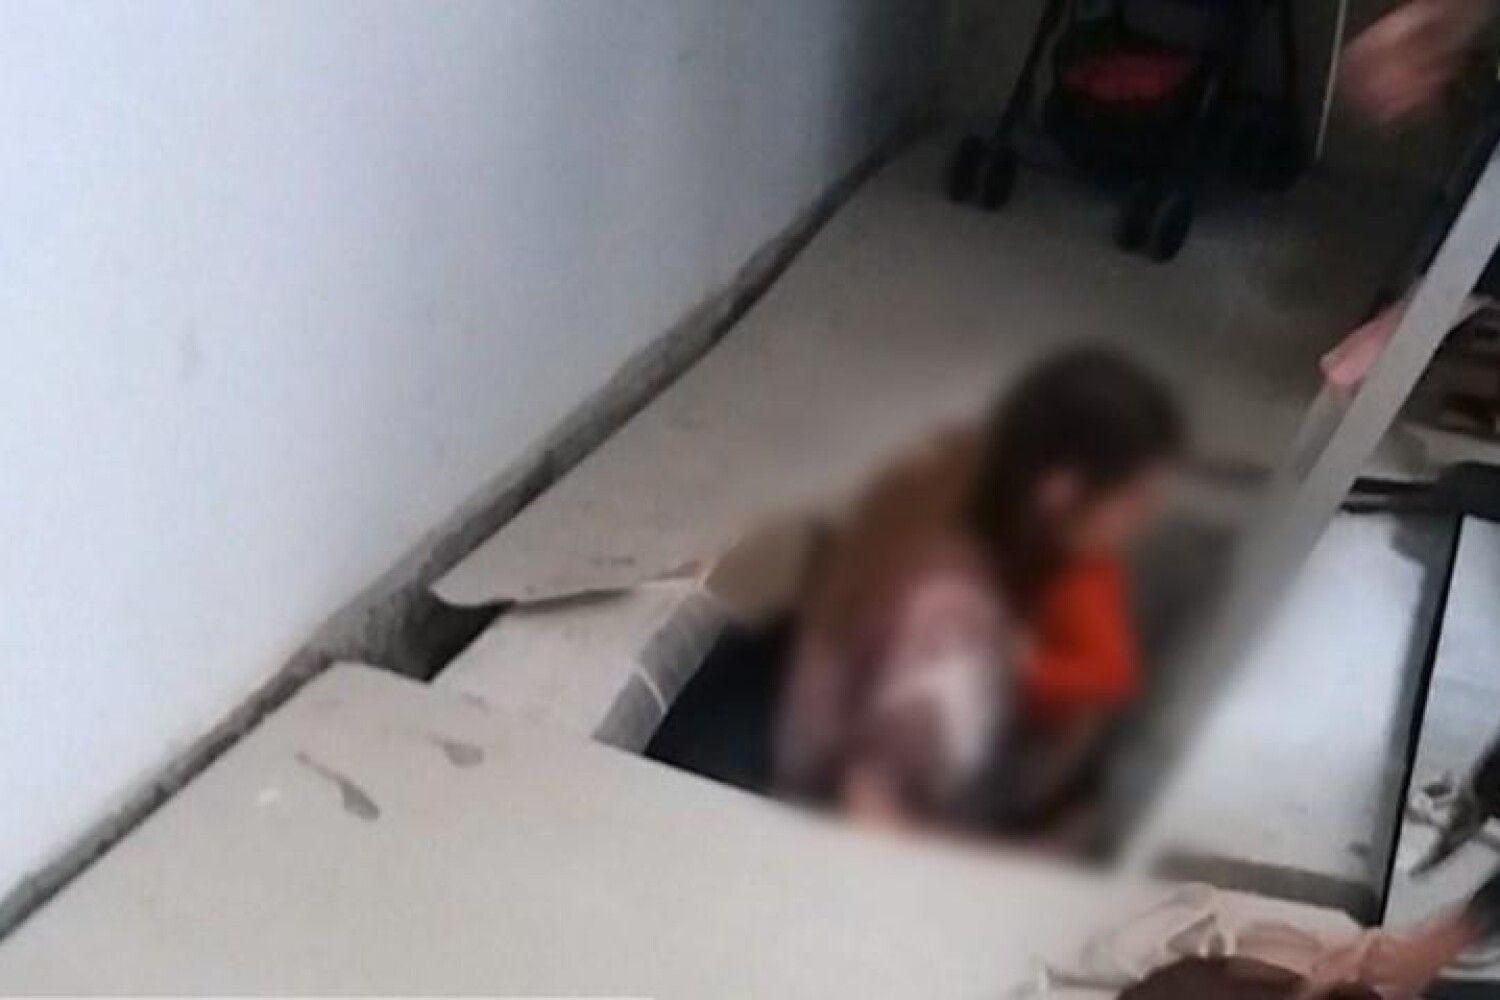 ребенок 1 год упал с дивана и ударился затылком